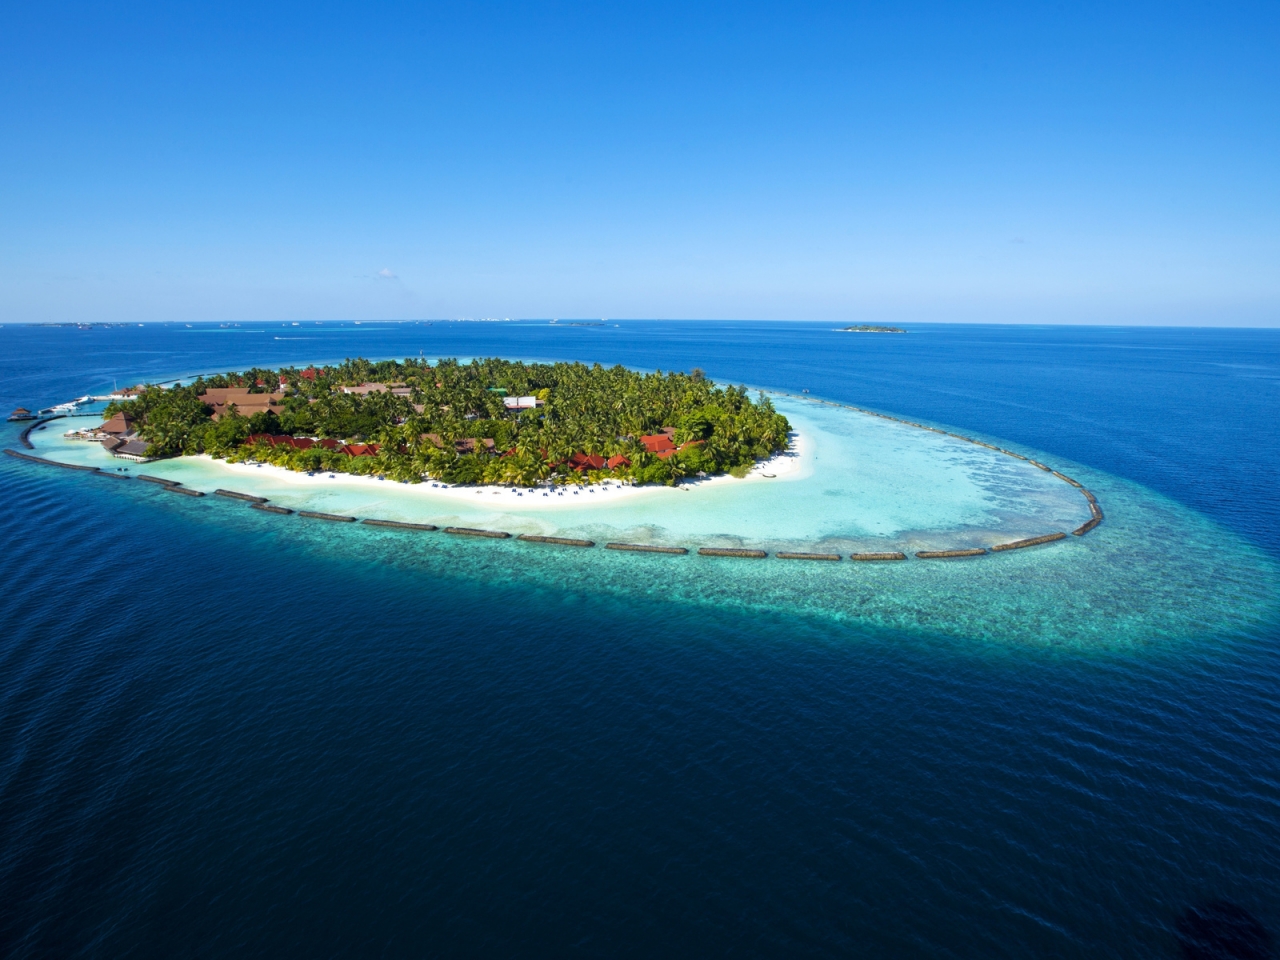 Amazing Maldives Island View for 1280 x 960 resolution